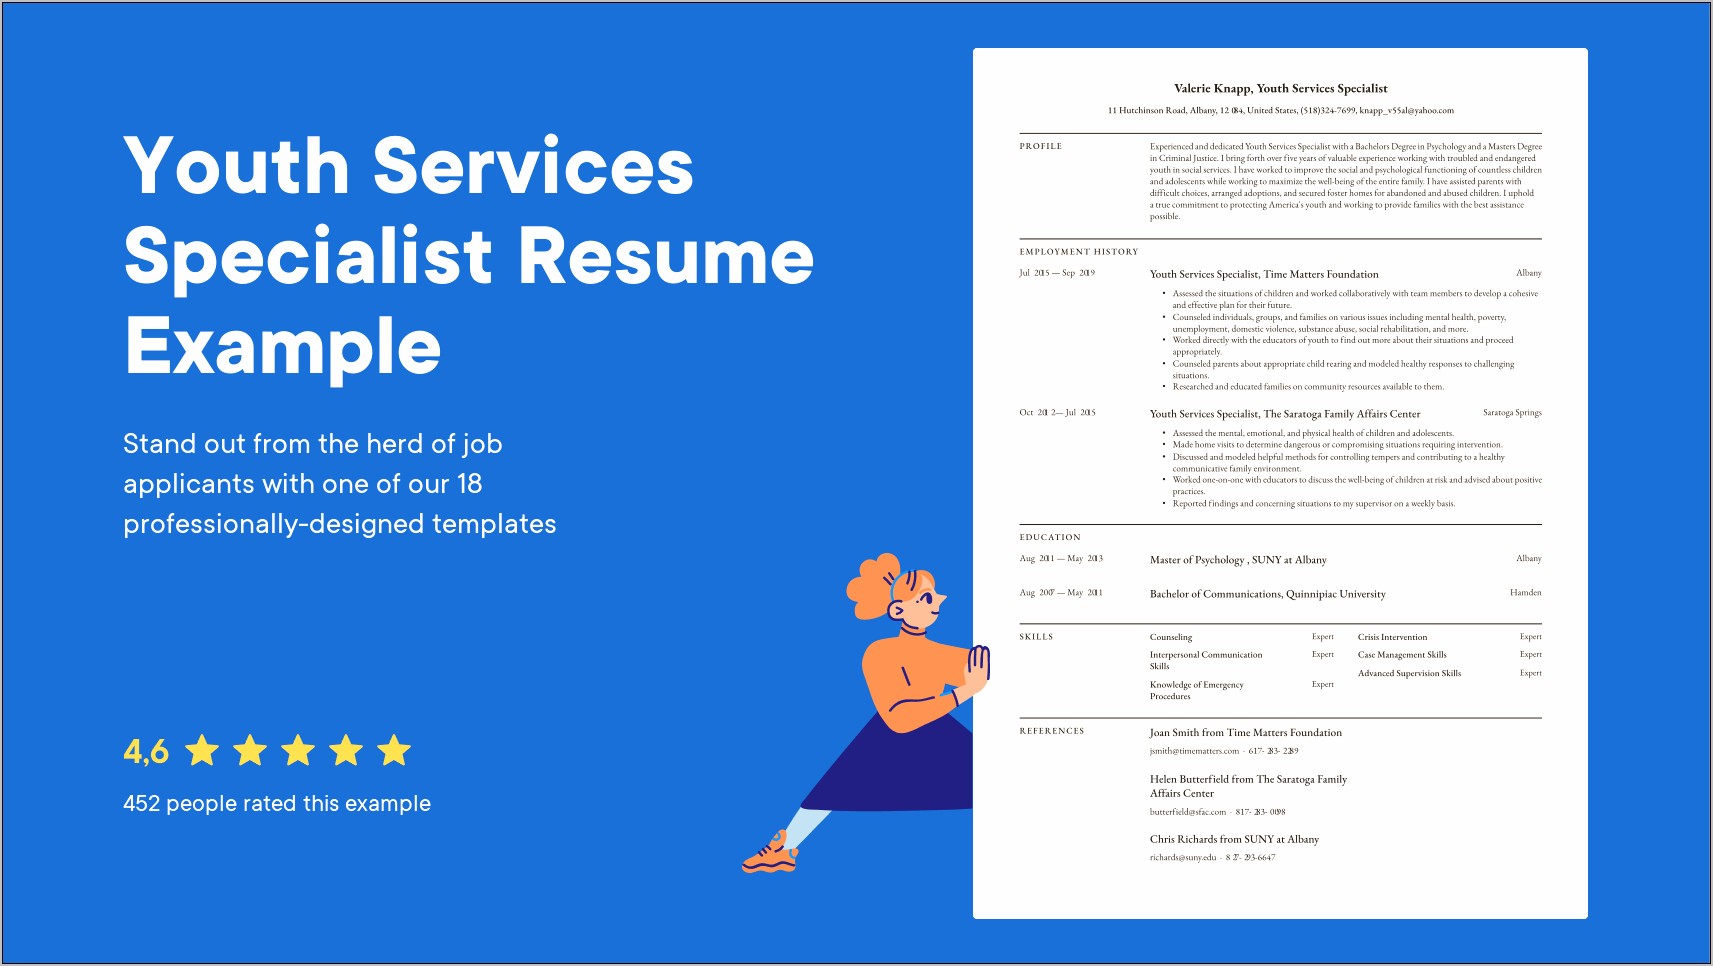 Youth Mentor Job Description Resume